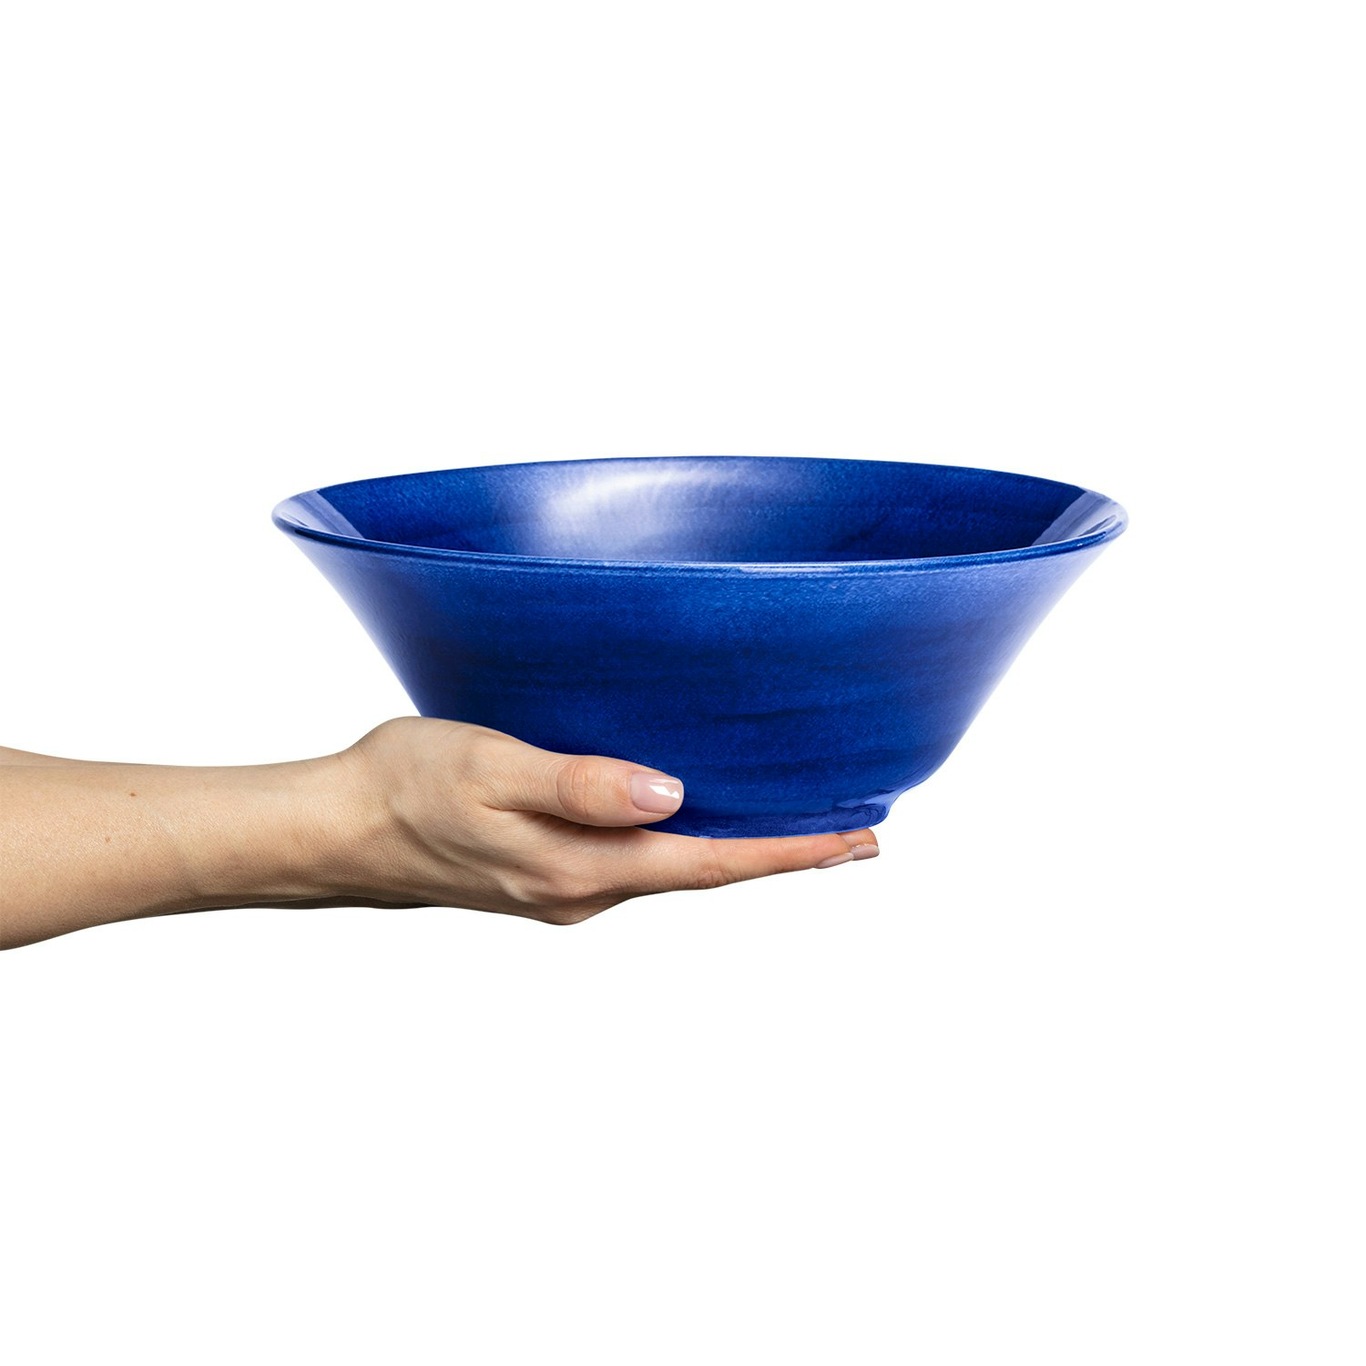 https://royaldesign.com/image/2/mateus-basic-bowl-large-2-l-2?w=800&quality=80